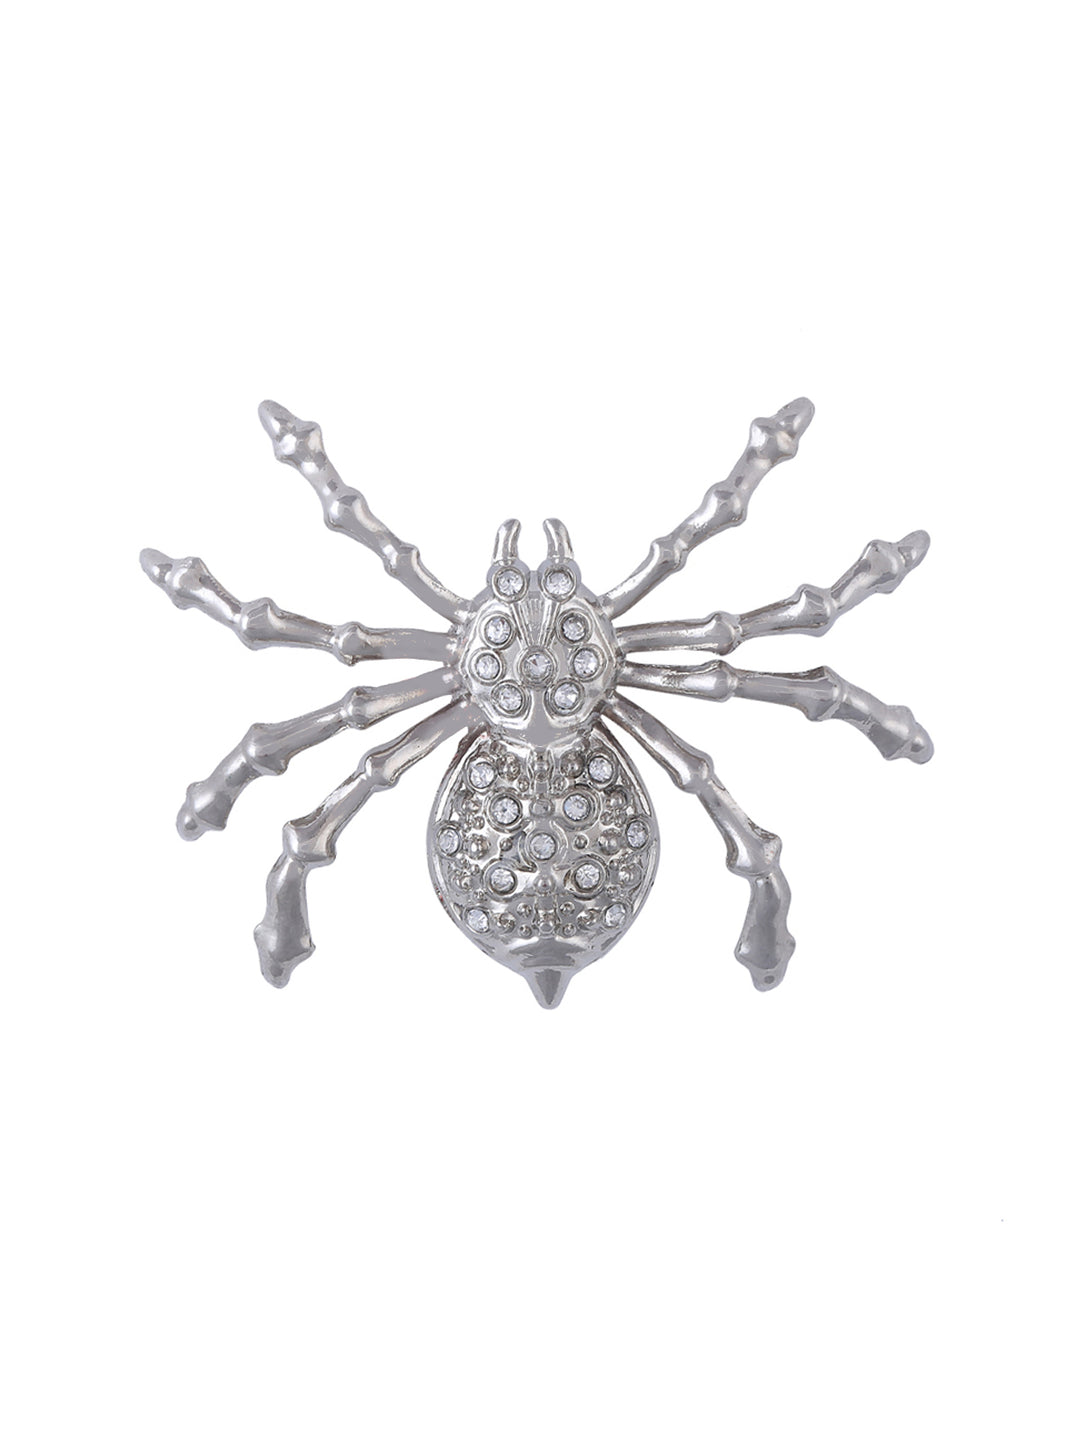 Creepy Designer Spider Insect Brooch